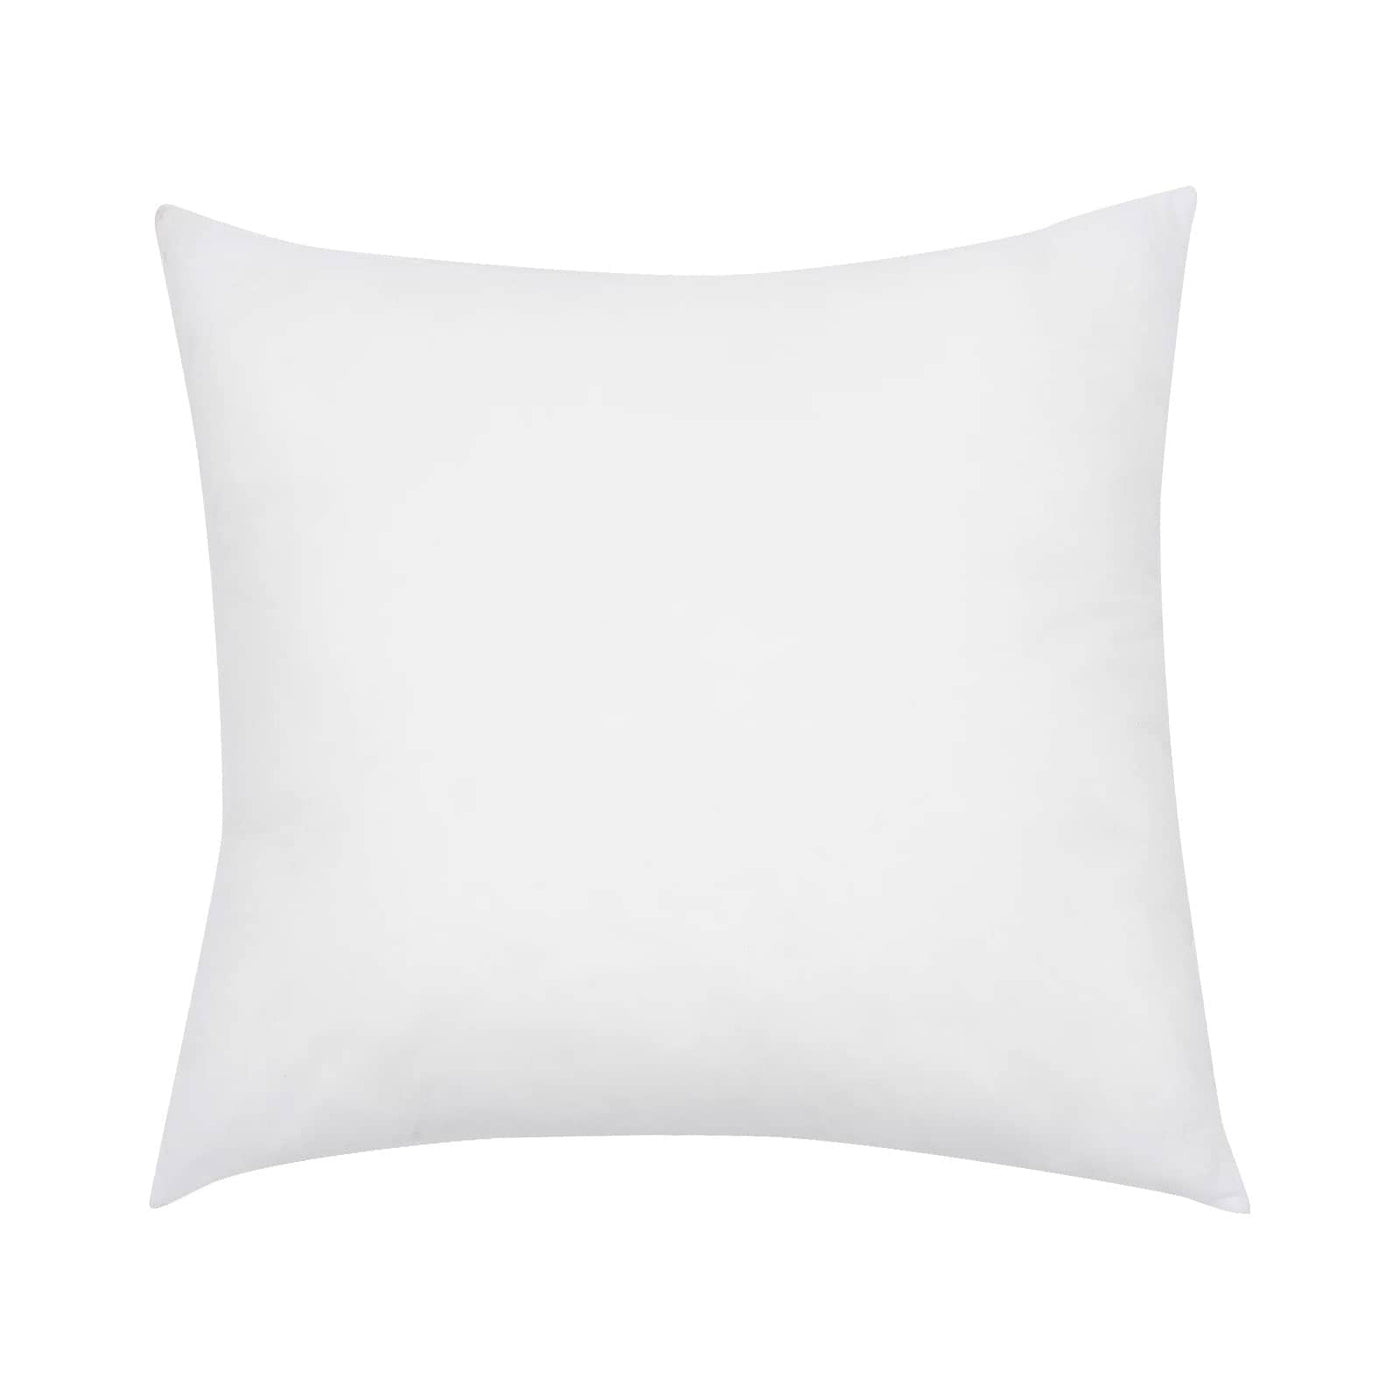 Large Square Cushion Pad, White, 50x50 cm 1